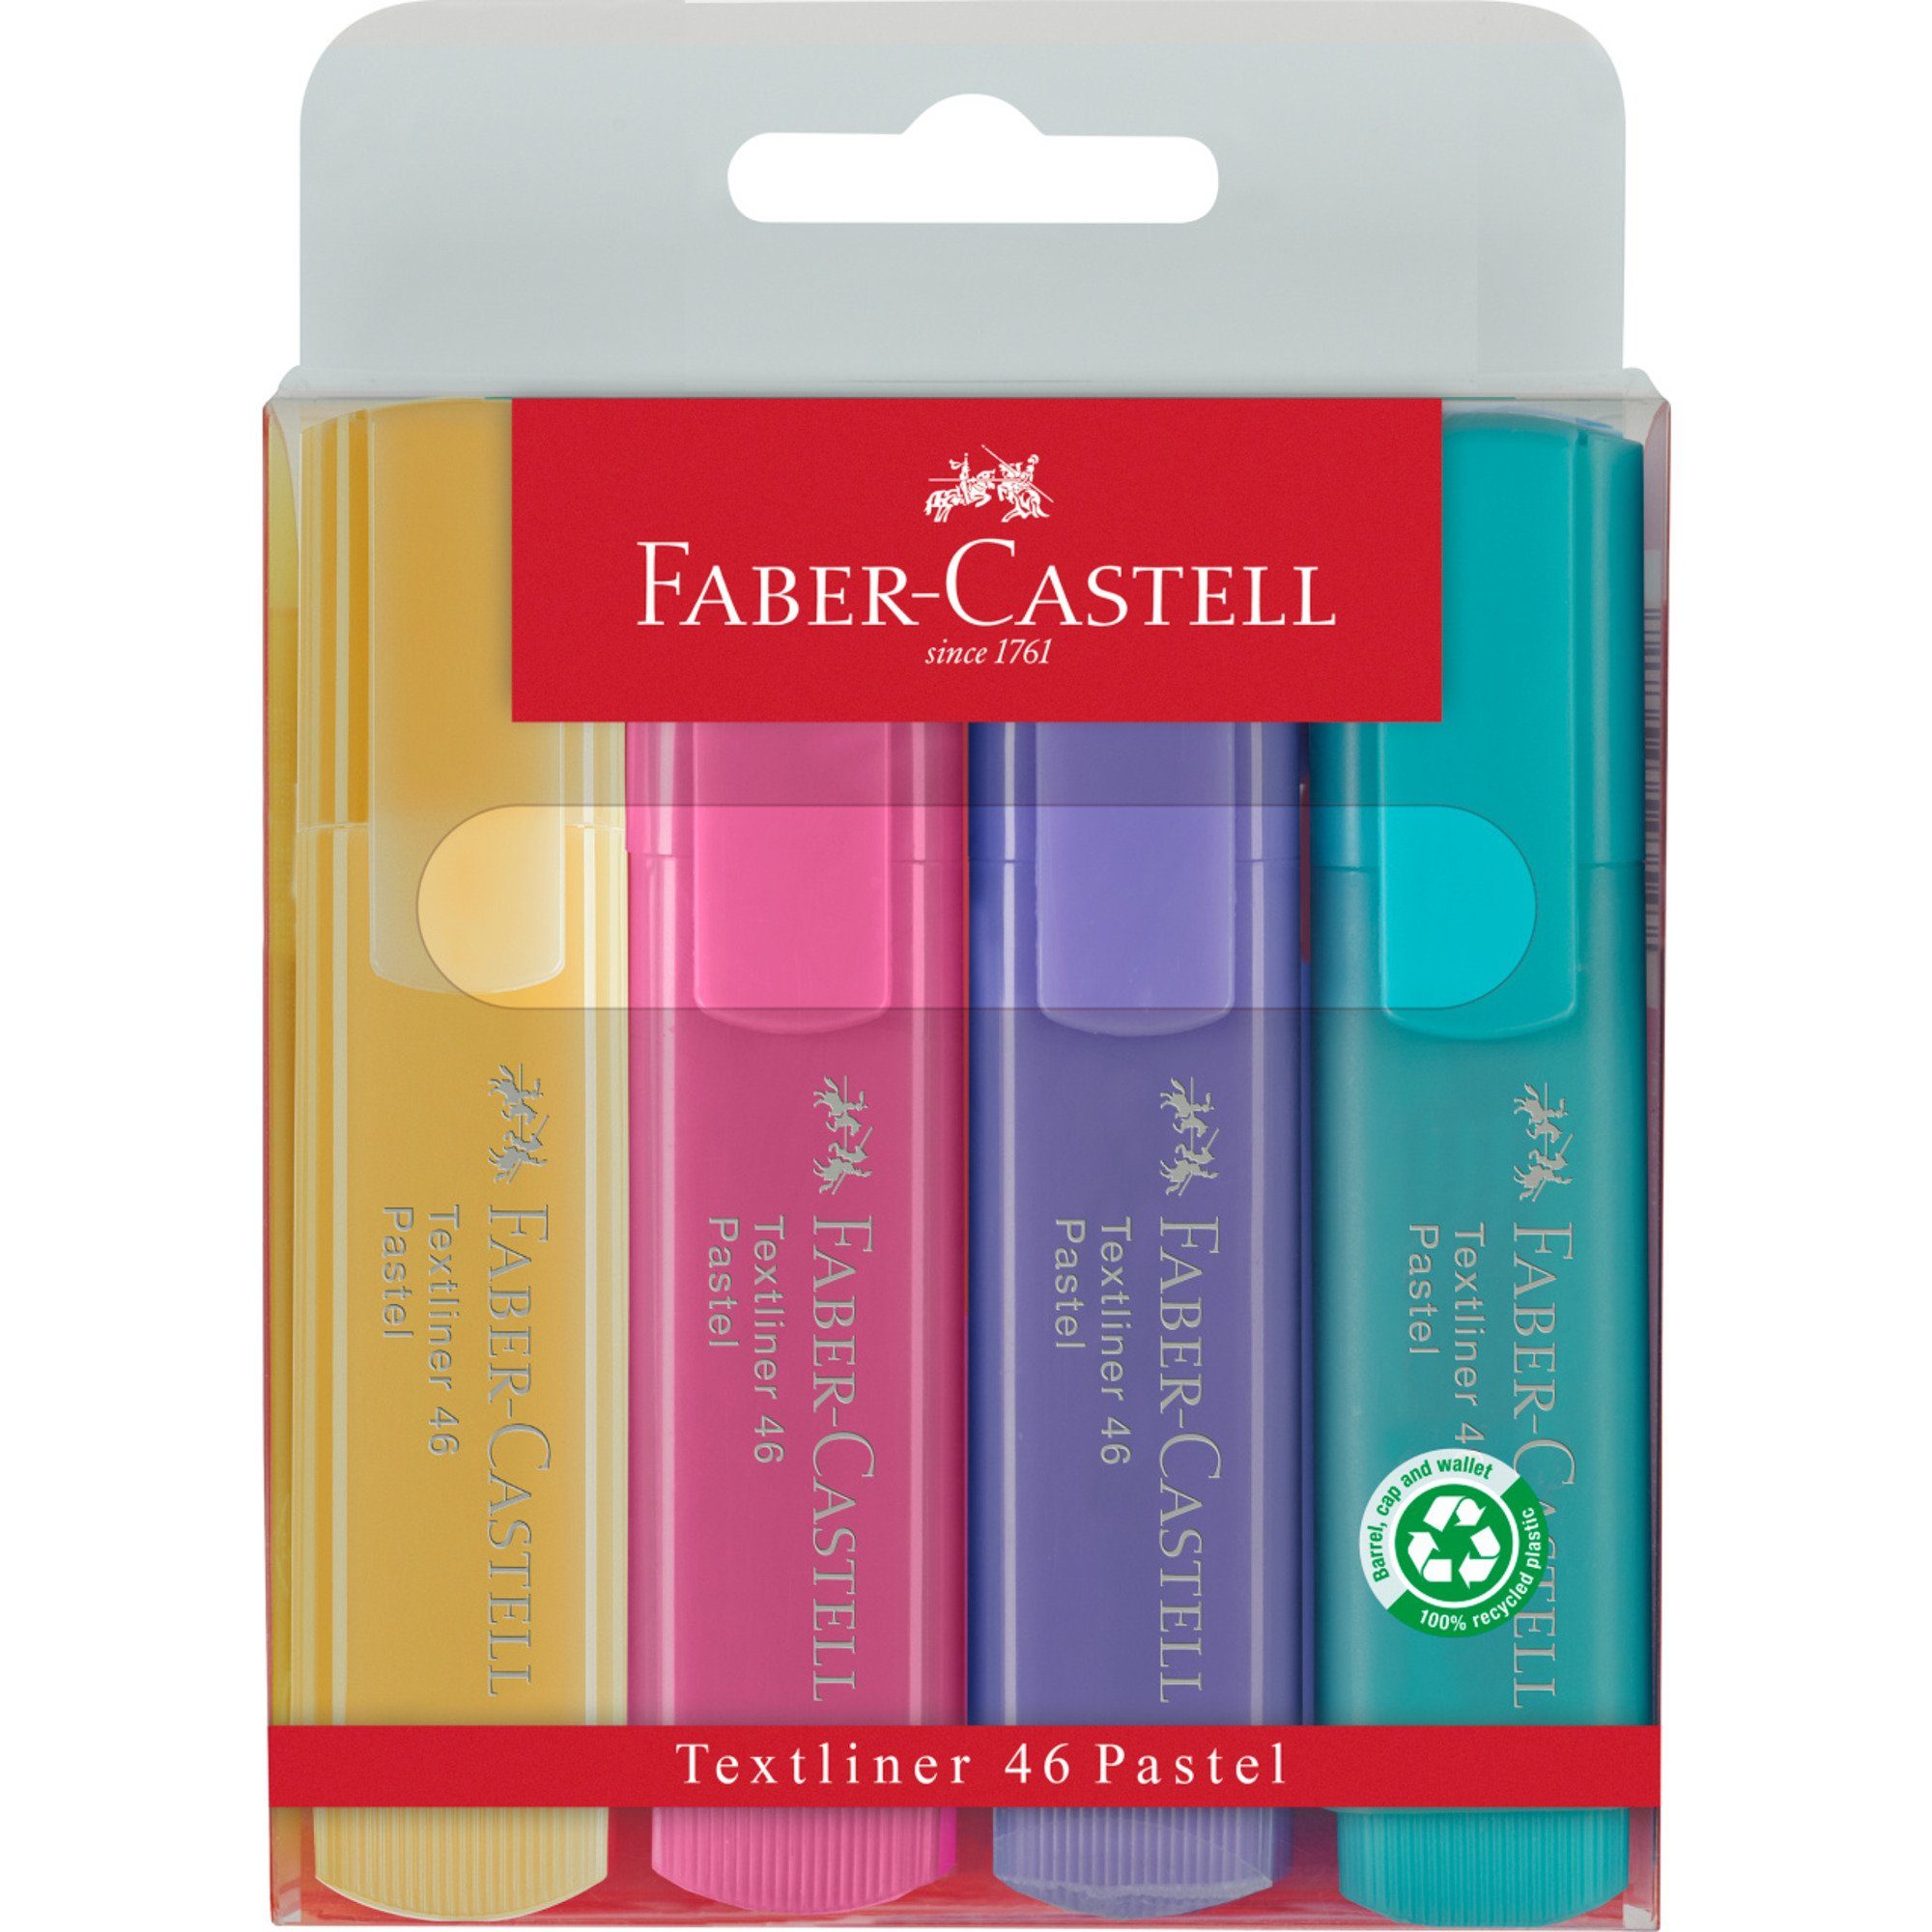 Faber-Castell Druckkugelschreiber Textliner 46 Pastell, 4er Etui